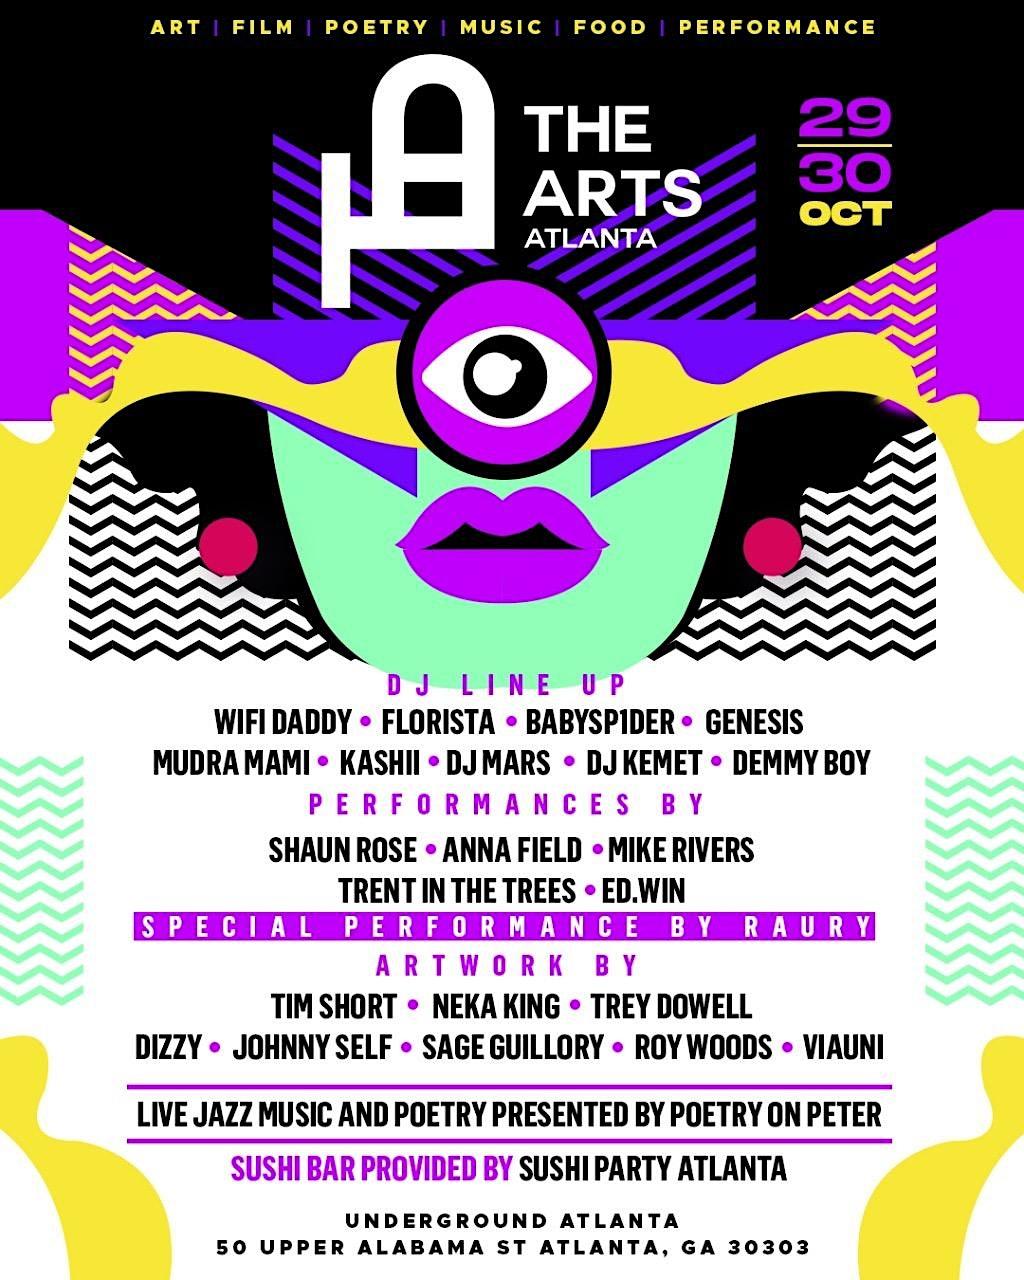 The Arts Atlanta (Halloween weekend)
Sat Oct 29, 2:00 PM - Sun Oct 30, 11:30 PM
in 12 days